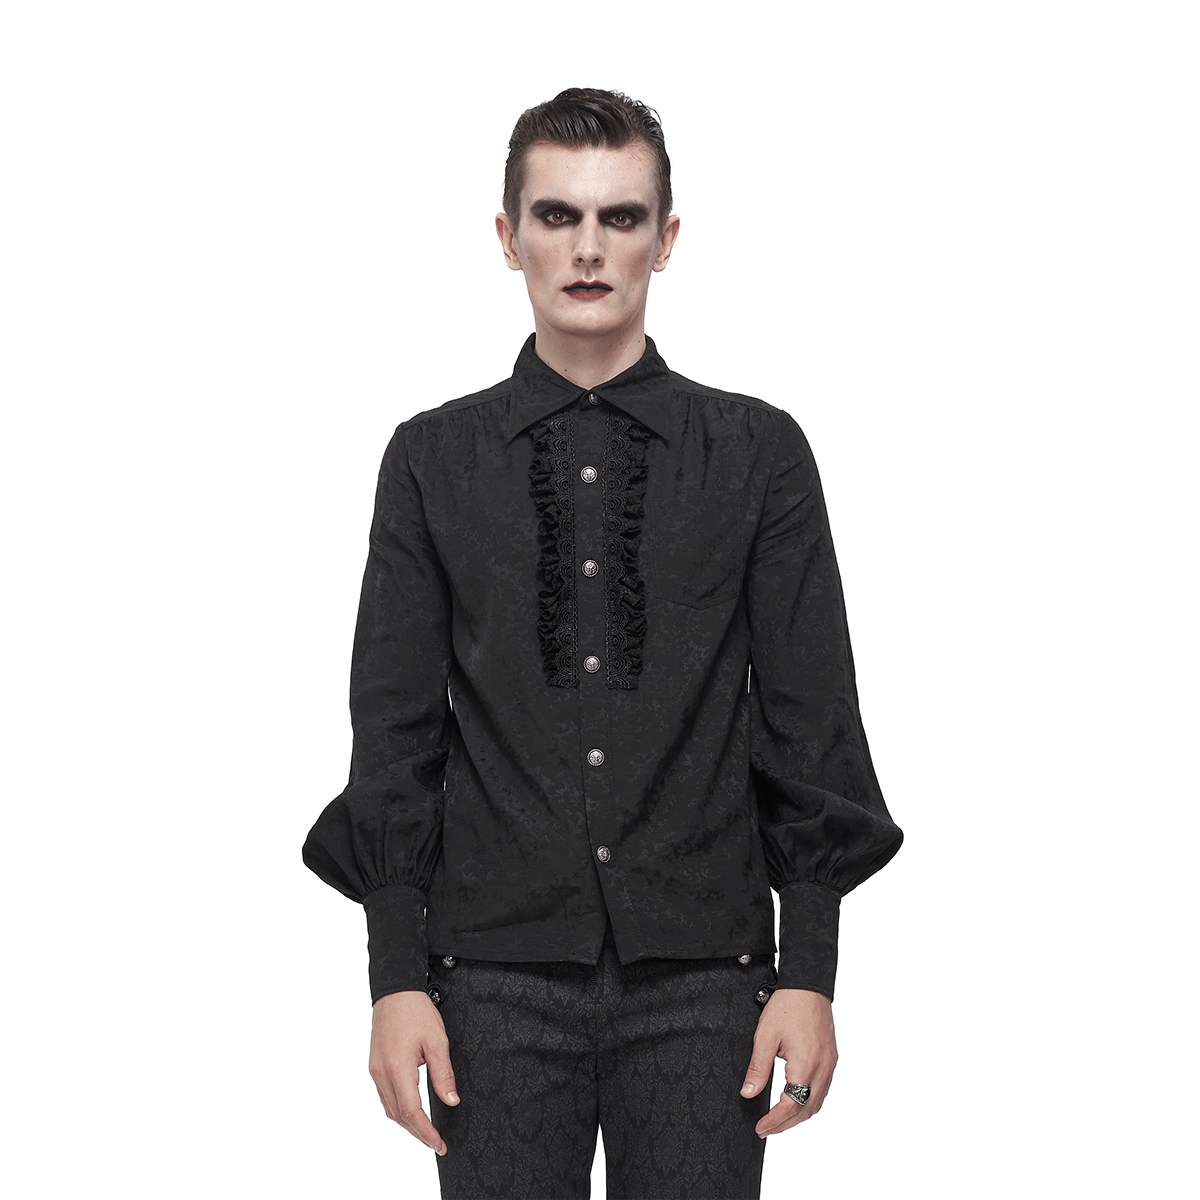 Gothic Jacquard Black Shirt with Lace Ruffles / Male Long Lantern Sleeves Shirt - HARD'N'HEAVY